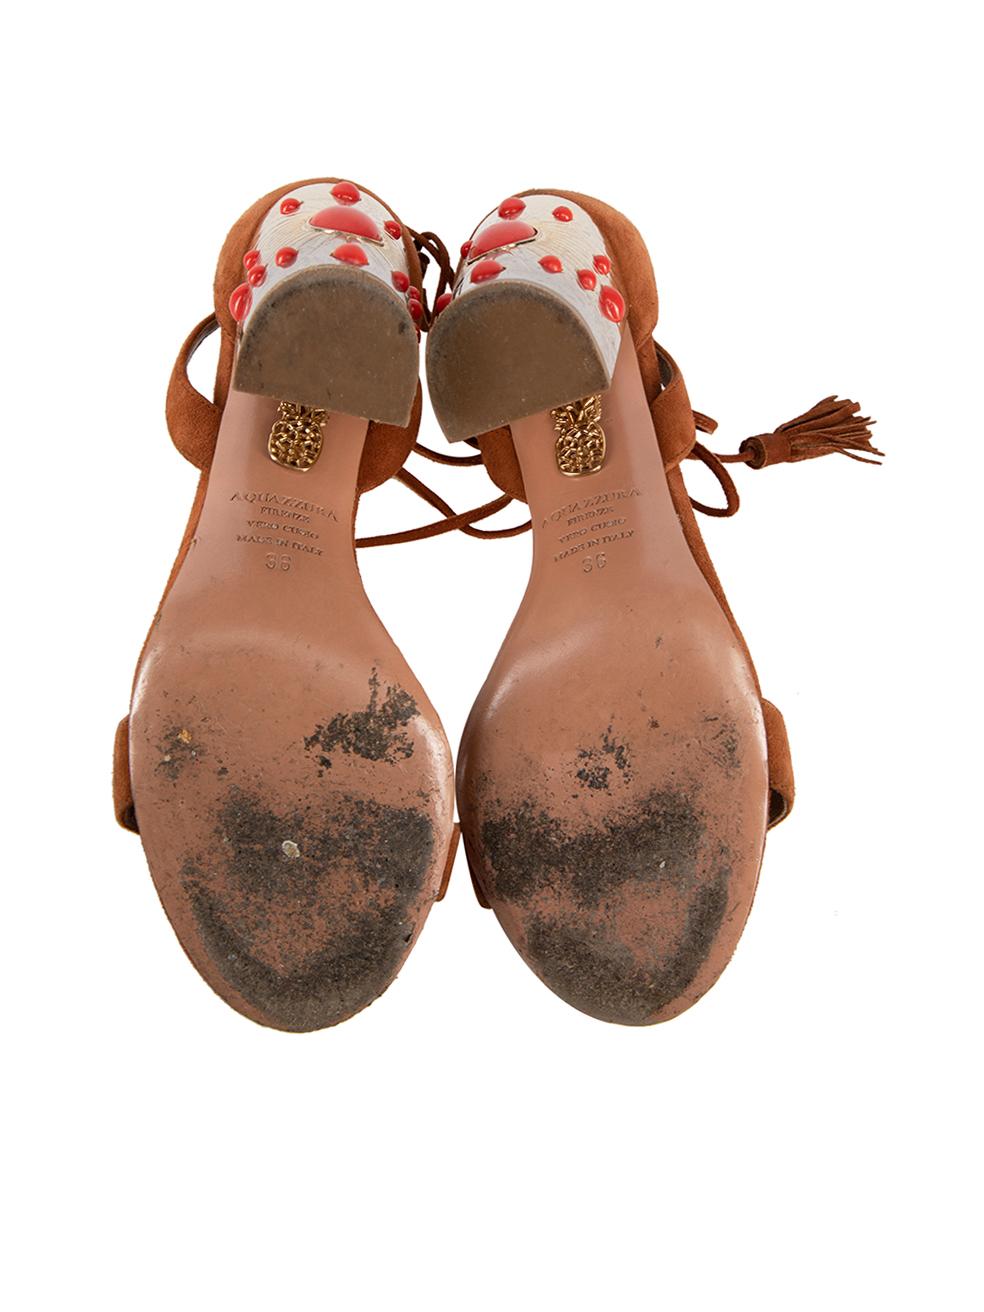 Aquazzura Brown Suede Embellished Heeled Sandals Size EU 36 Pour femmes en vente